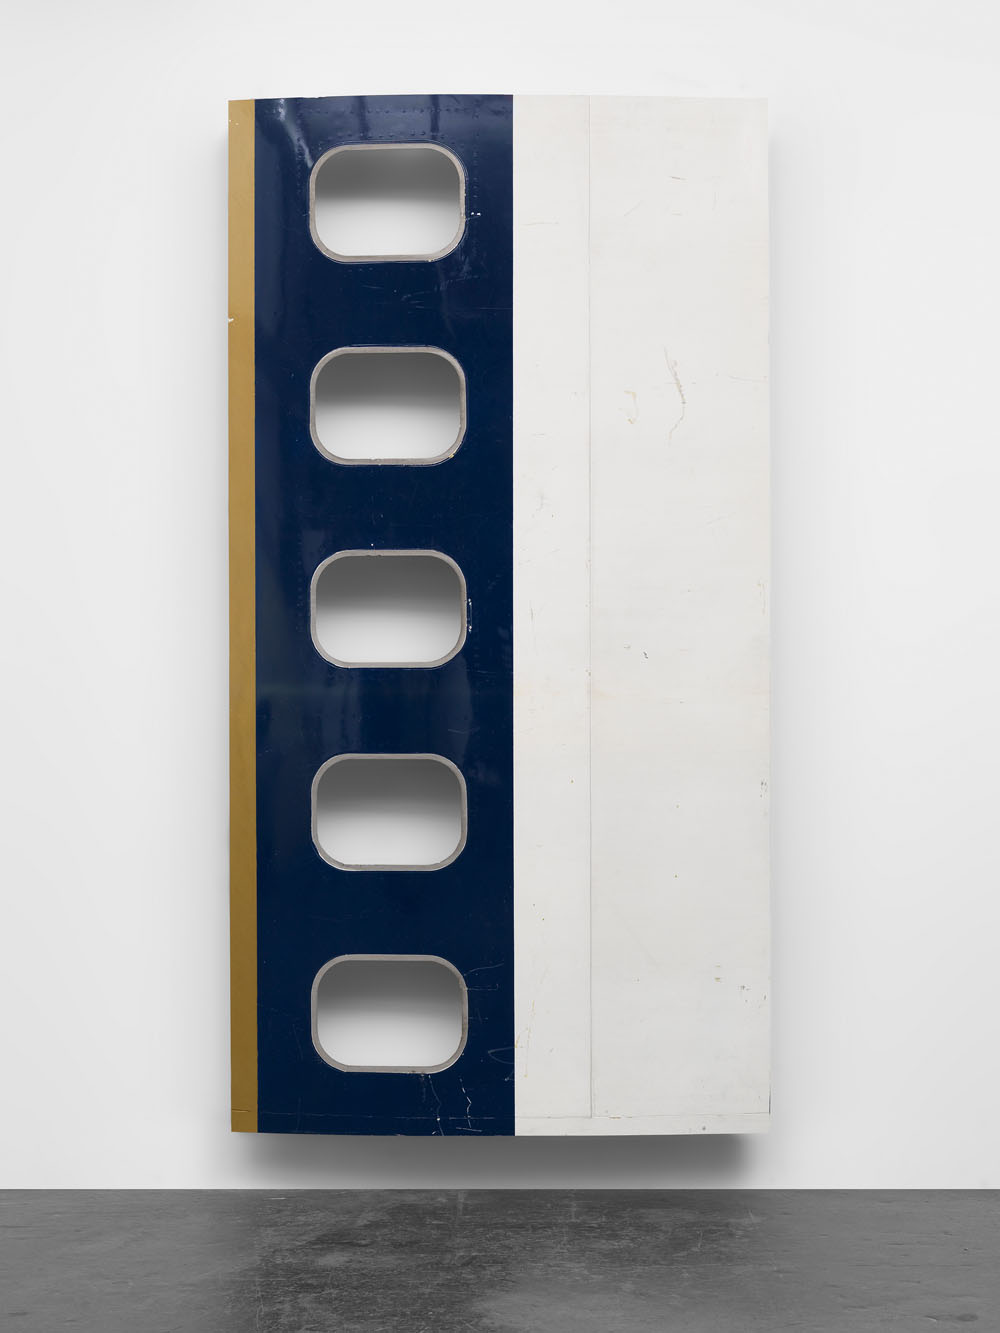 Michail Pirgelis Noble Descent, 2015 Aluminium, titan, lacquer 265 x 139 x 20 cm 104 1/4 x 54 3/4 x 7 7/8 inches © Michail Pirgelis Courtesy Sprüth Magers